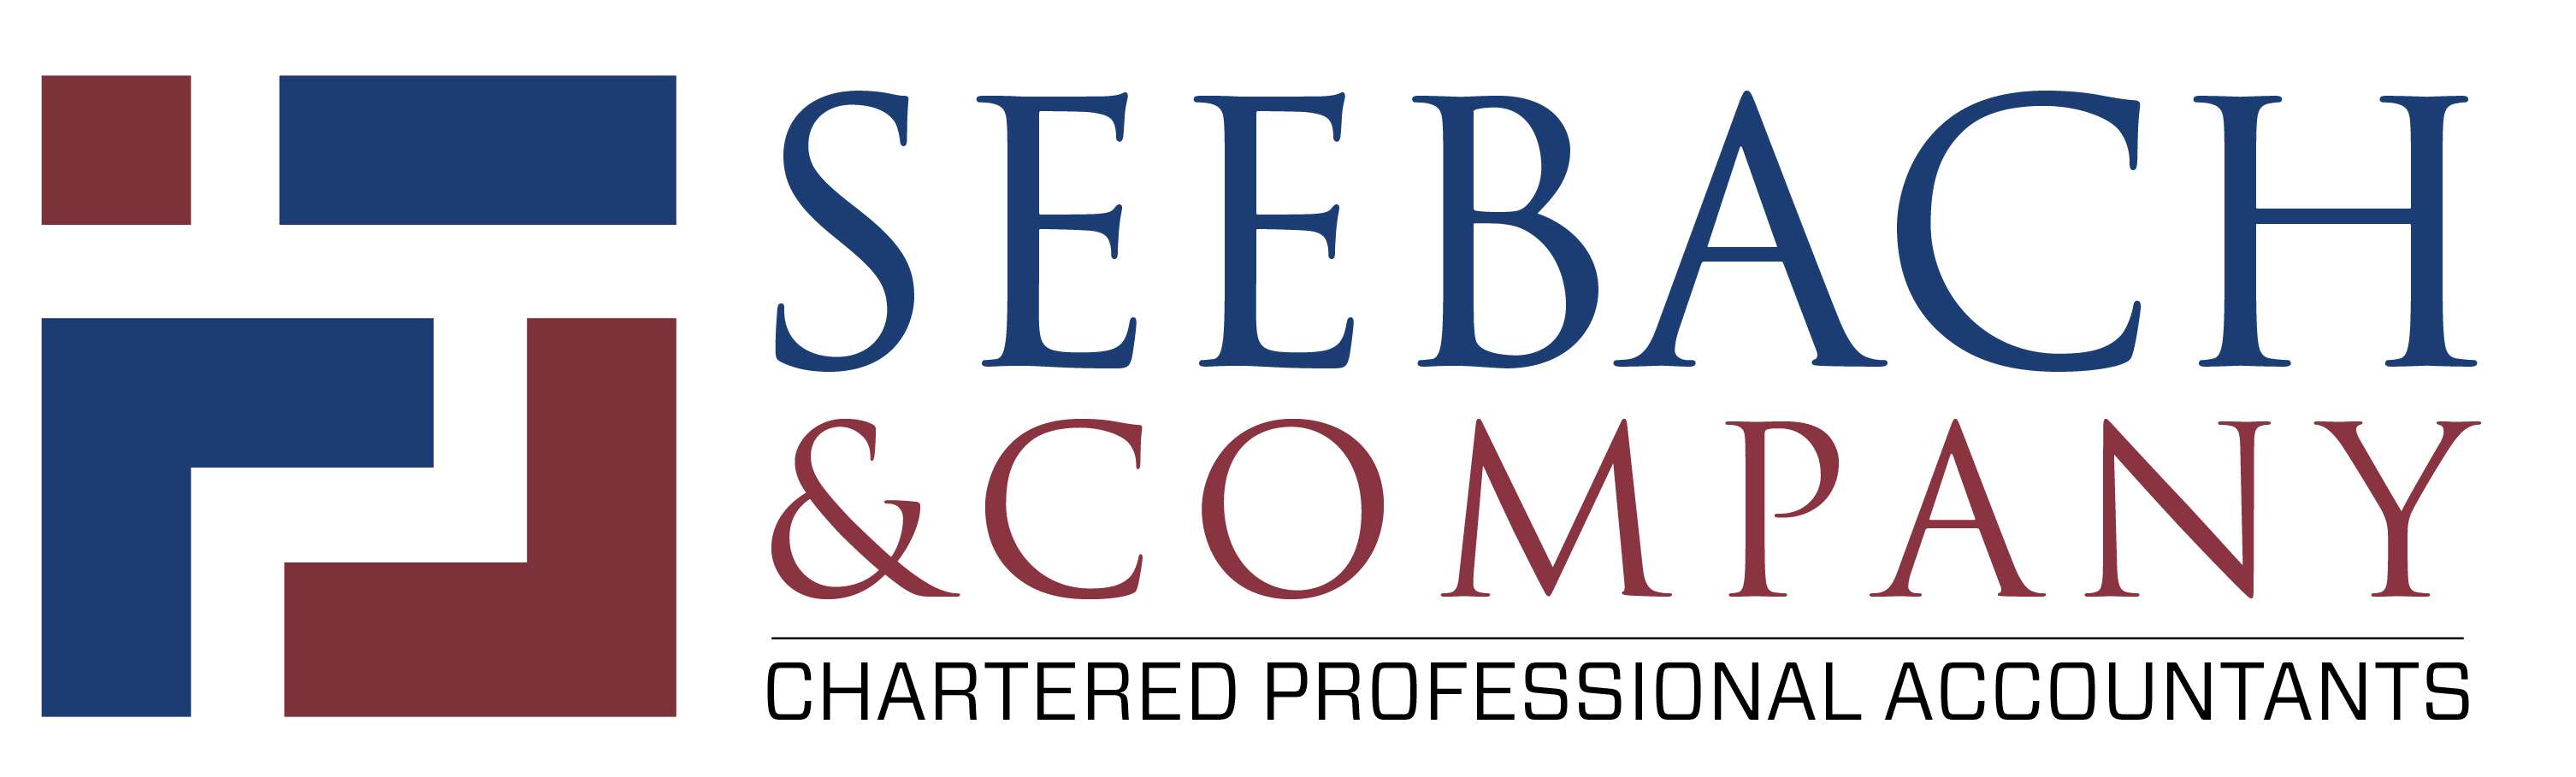 Seebach & Company